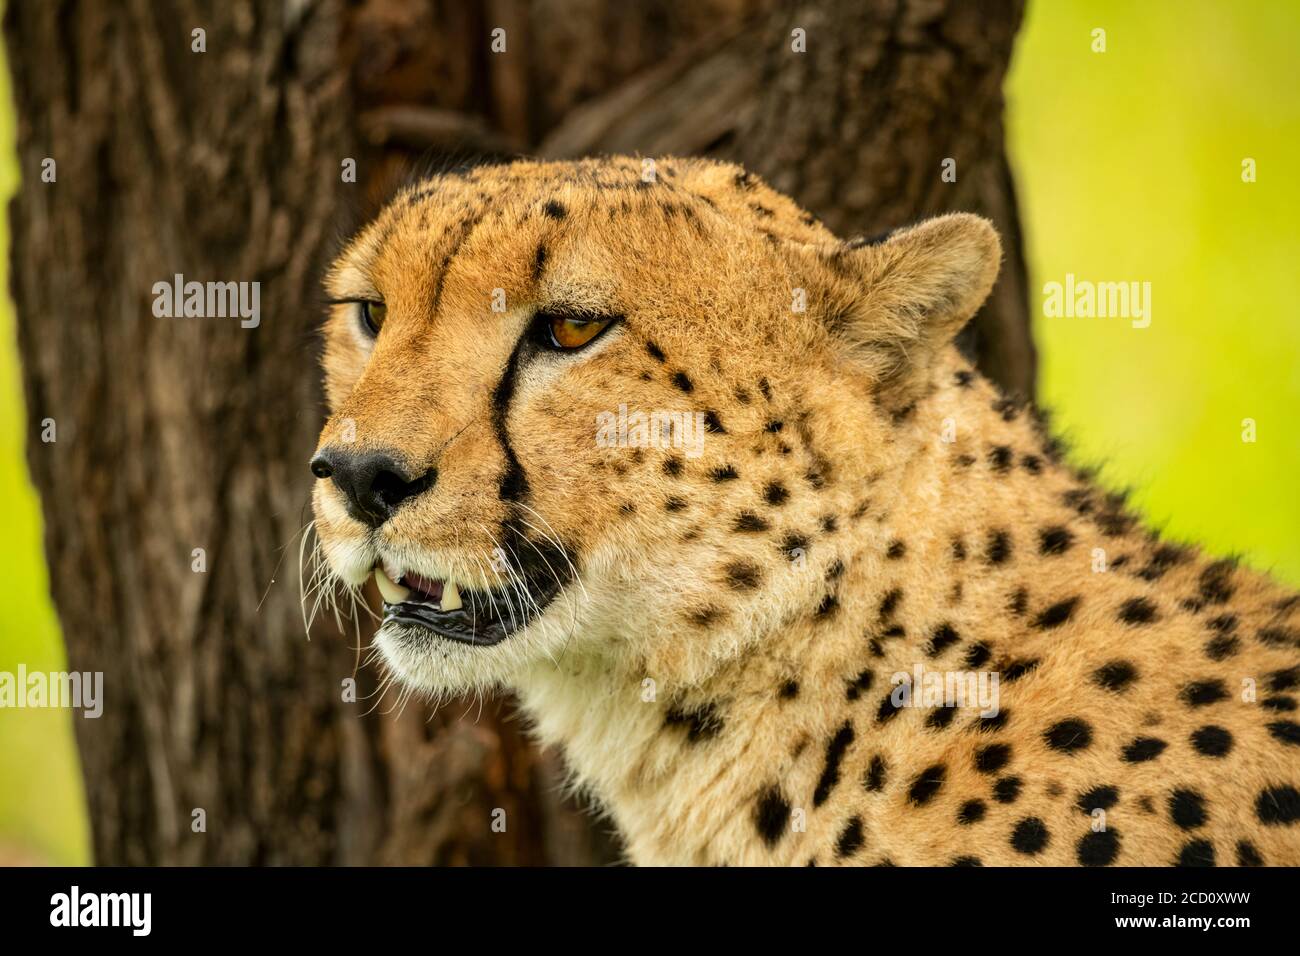 Close-up portrait of cheetah (Acinonyx jubatus) sitting next to a tree trunk; Tanzania Stock Photo